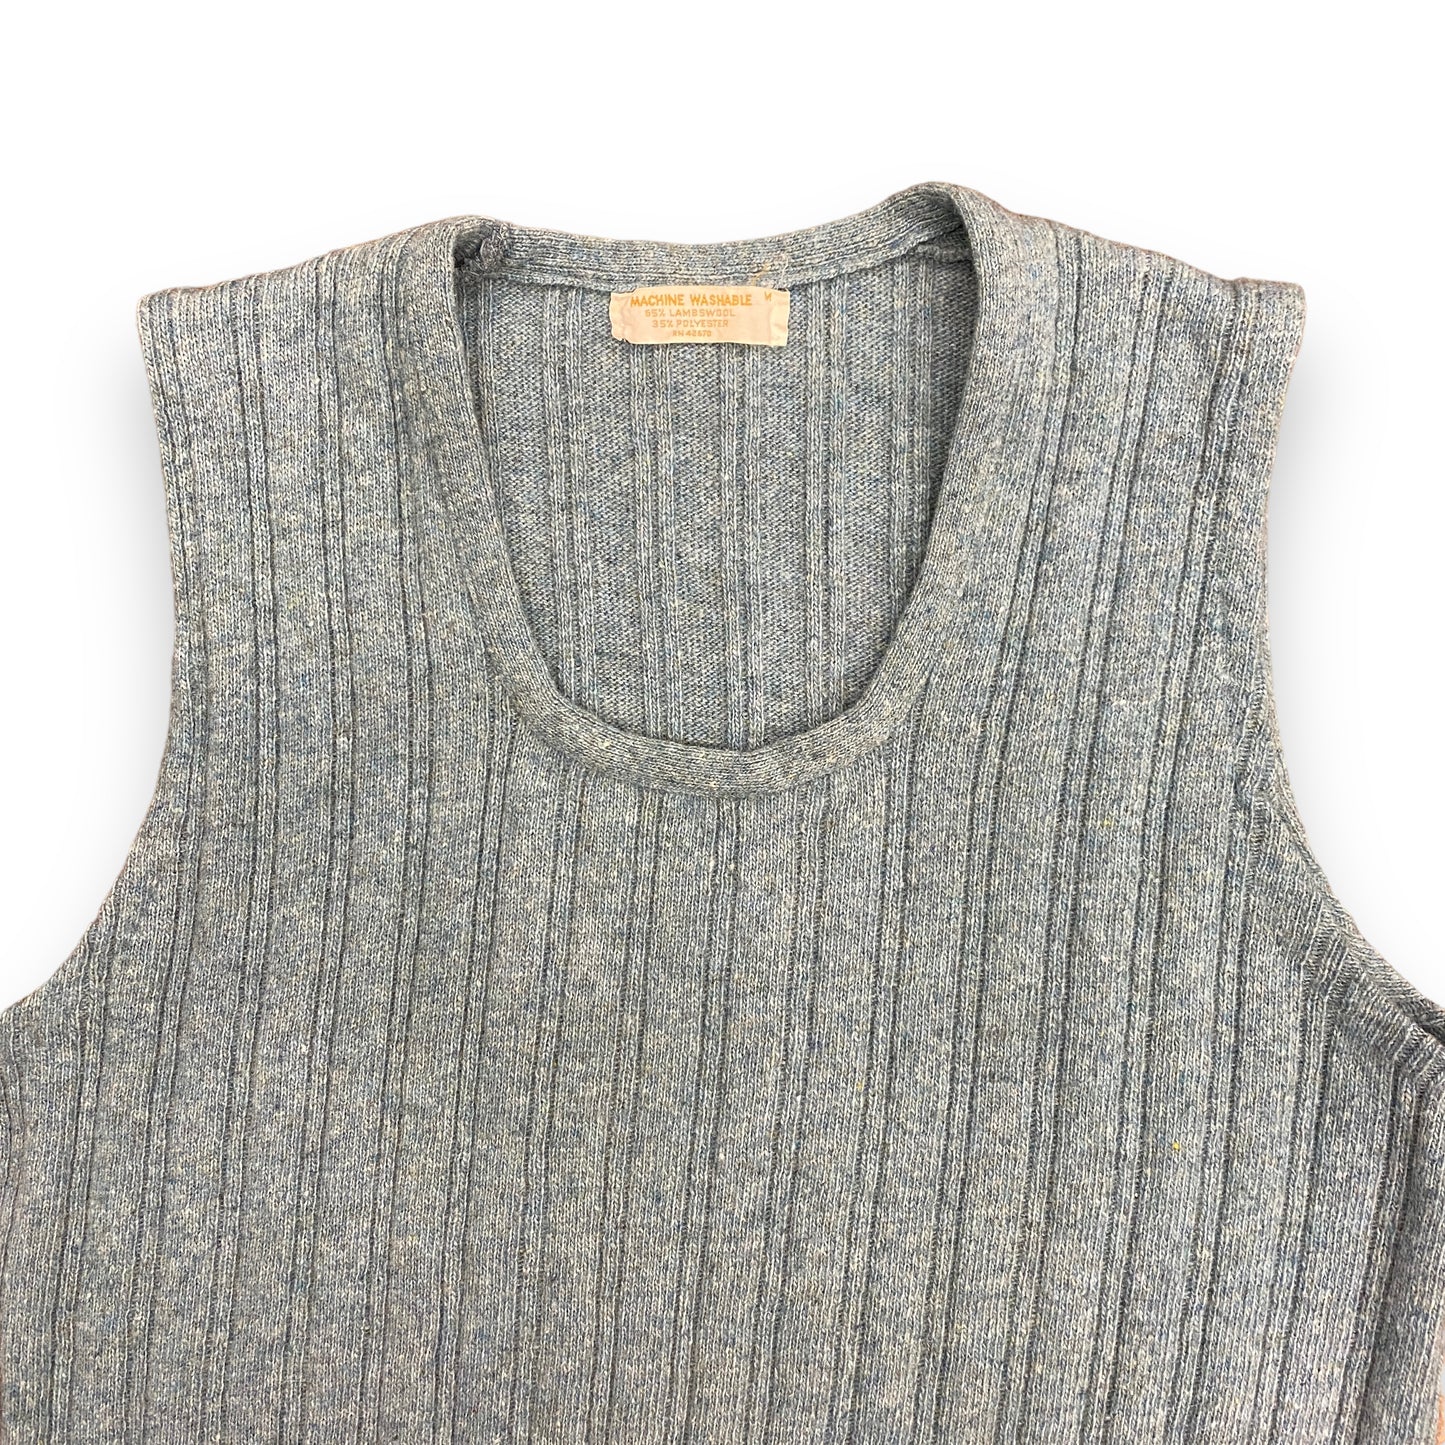 1970s Light Blue Lambswool Sweater Vest - Size Medium